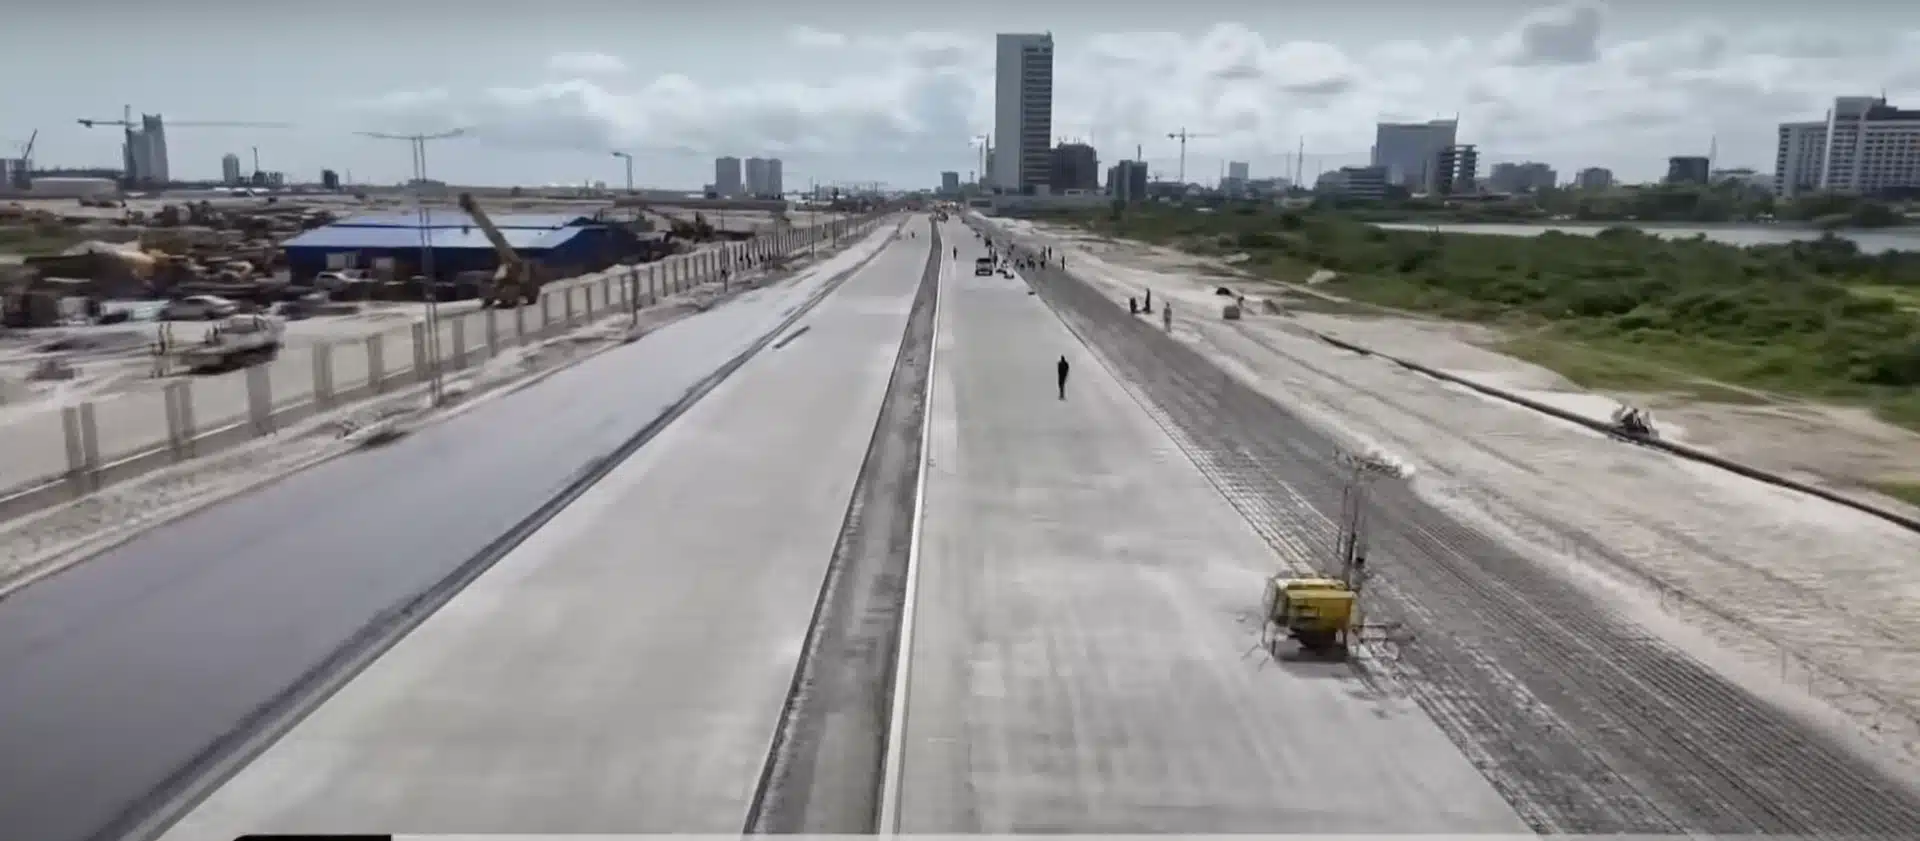 FG Begins Construction On Lagos-Calabar Coastal Highway Project